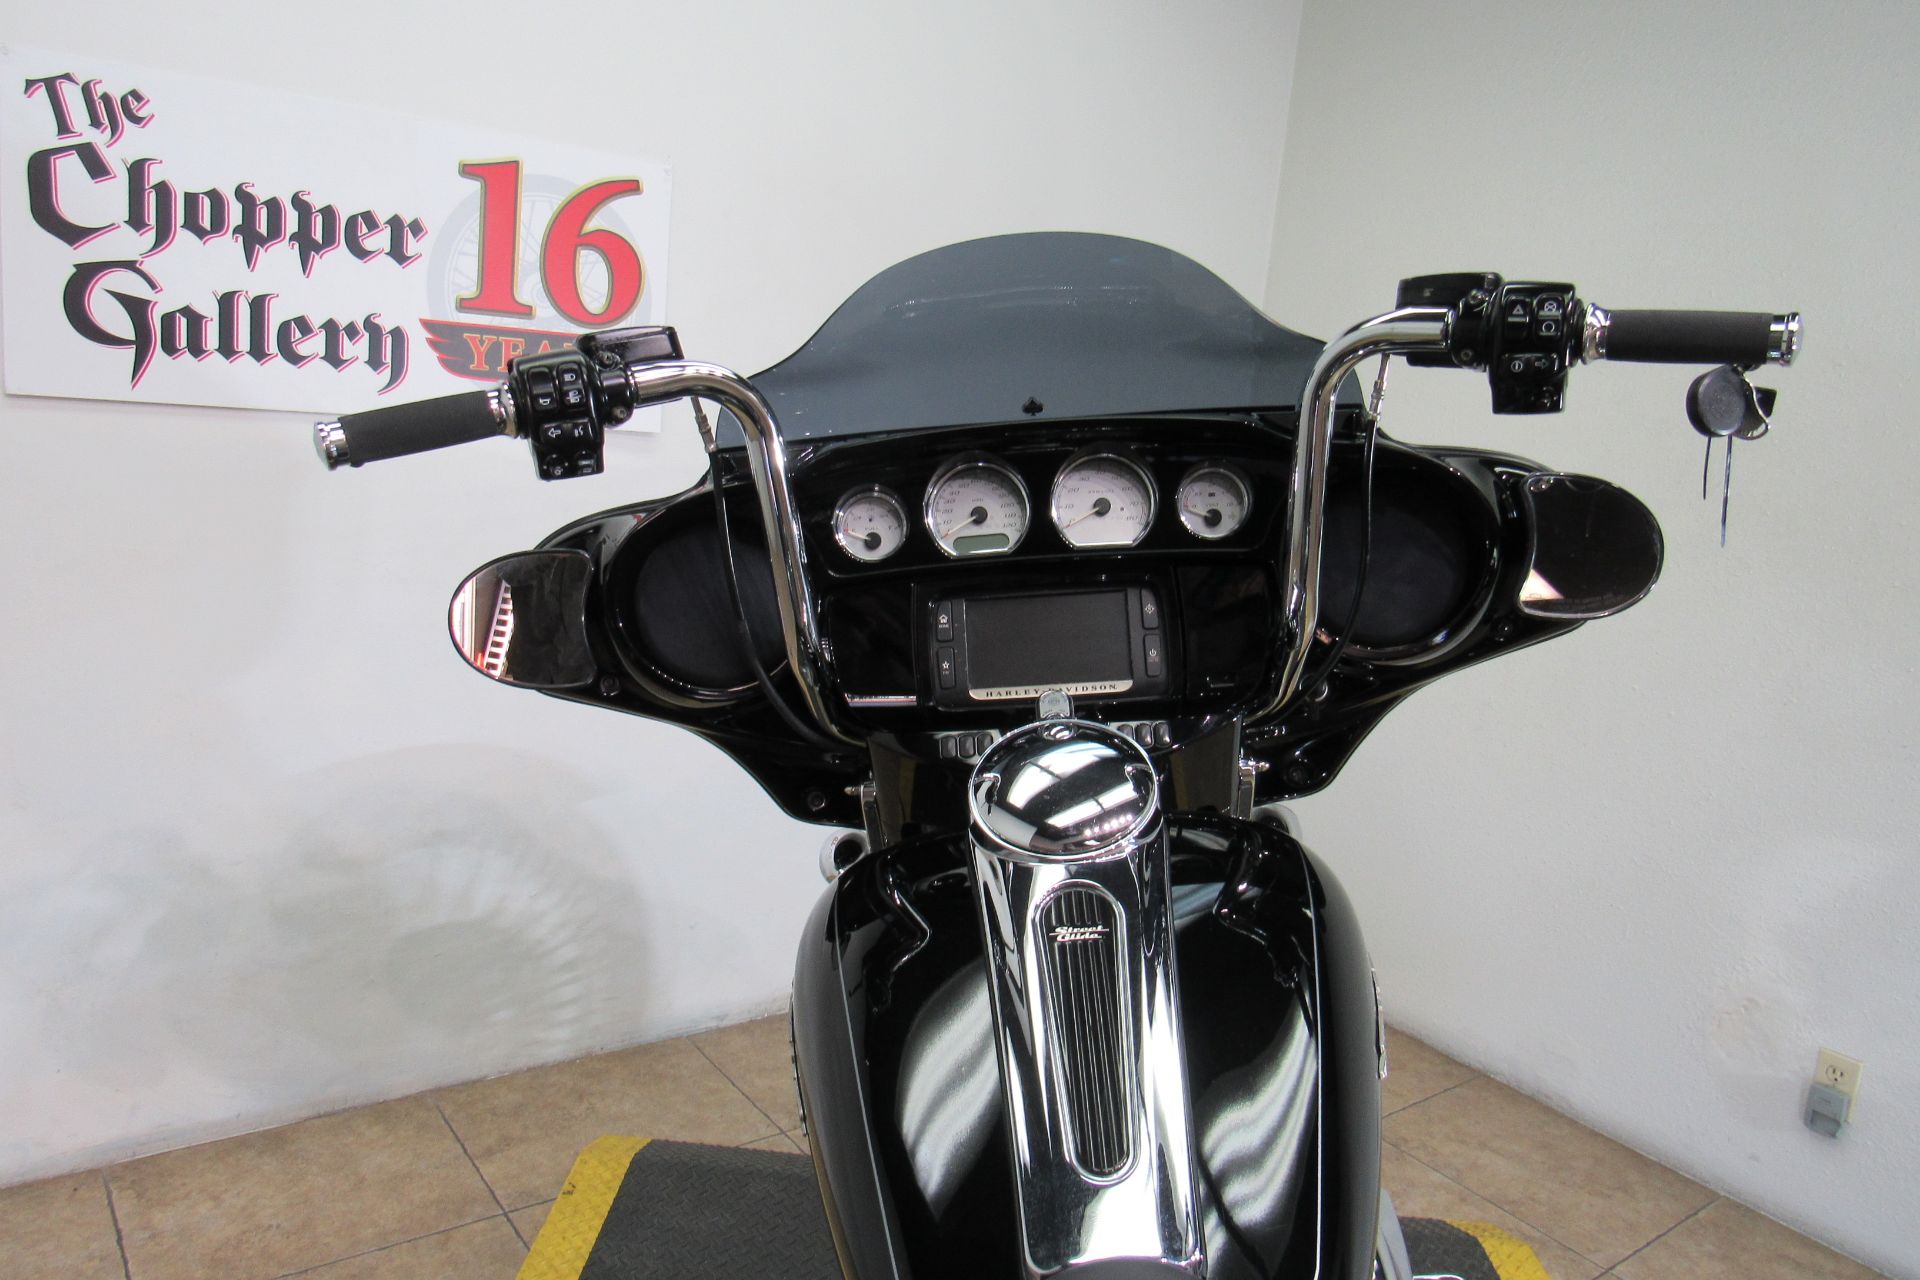 2015 Harley-Davidson Street Glide® Special in Temecula, California - Photo 19